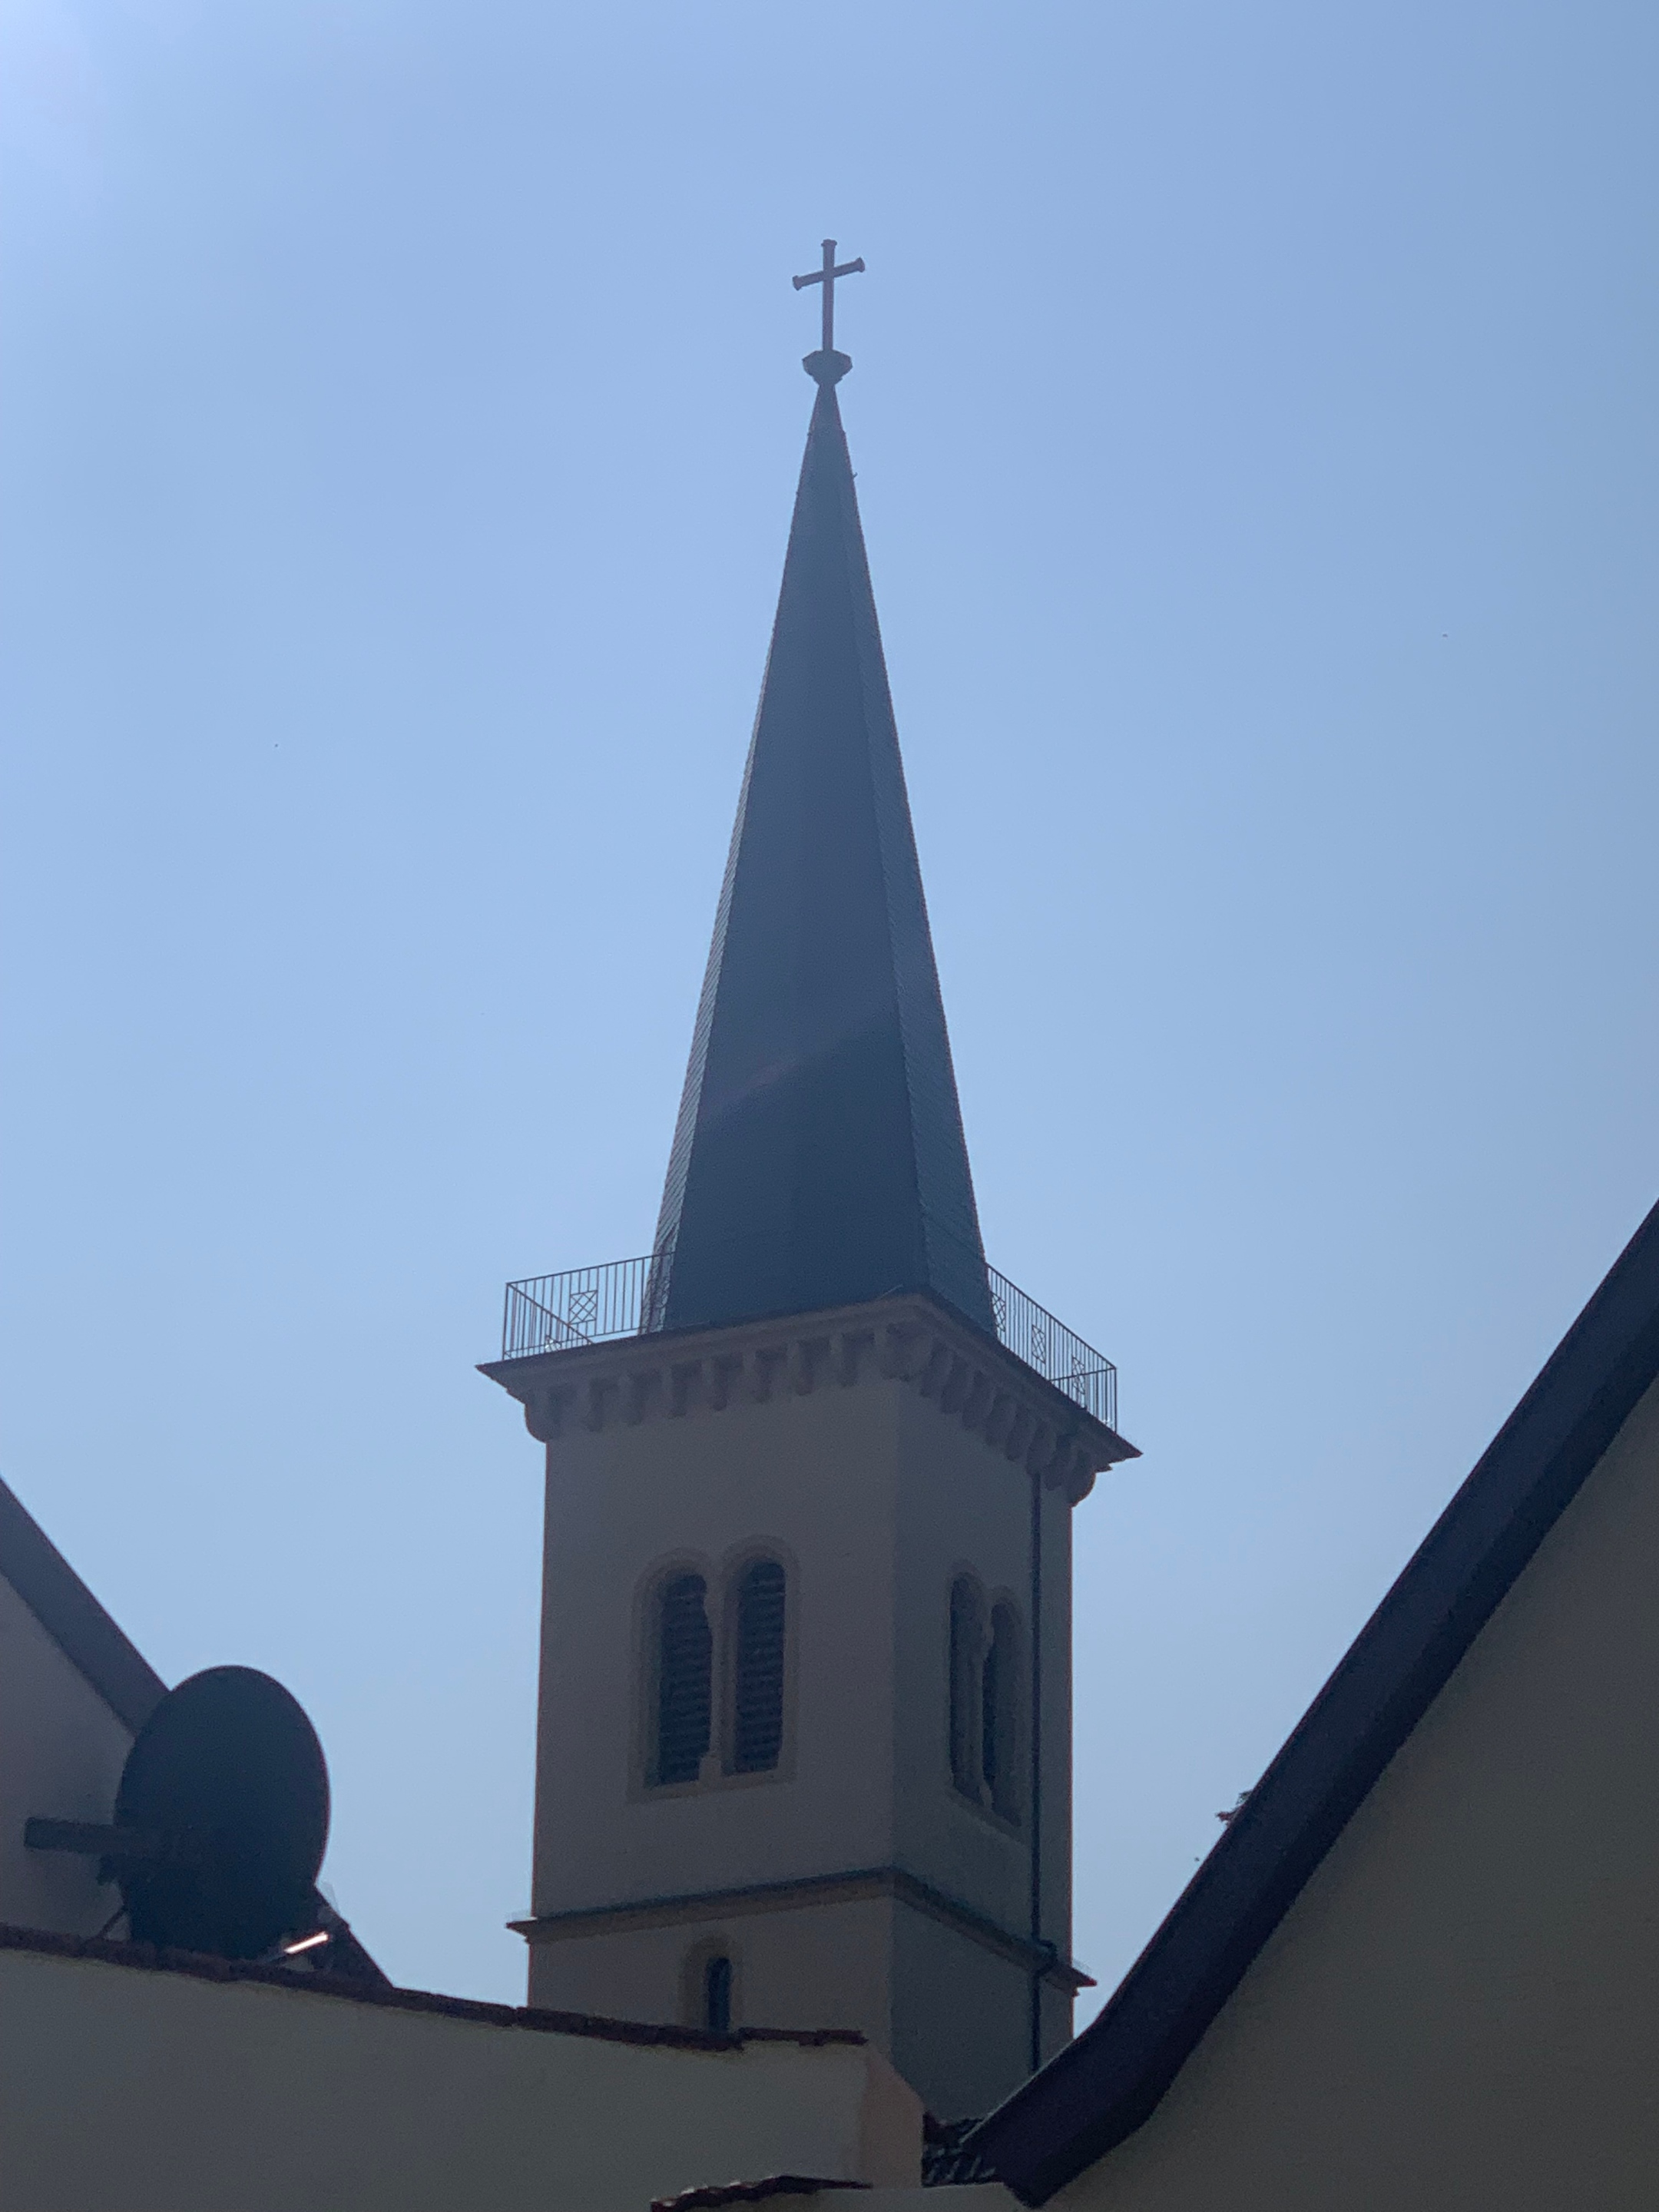 St. Jakobus Turm